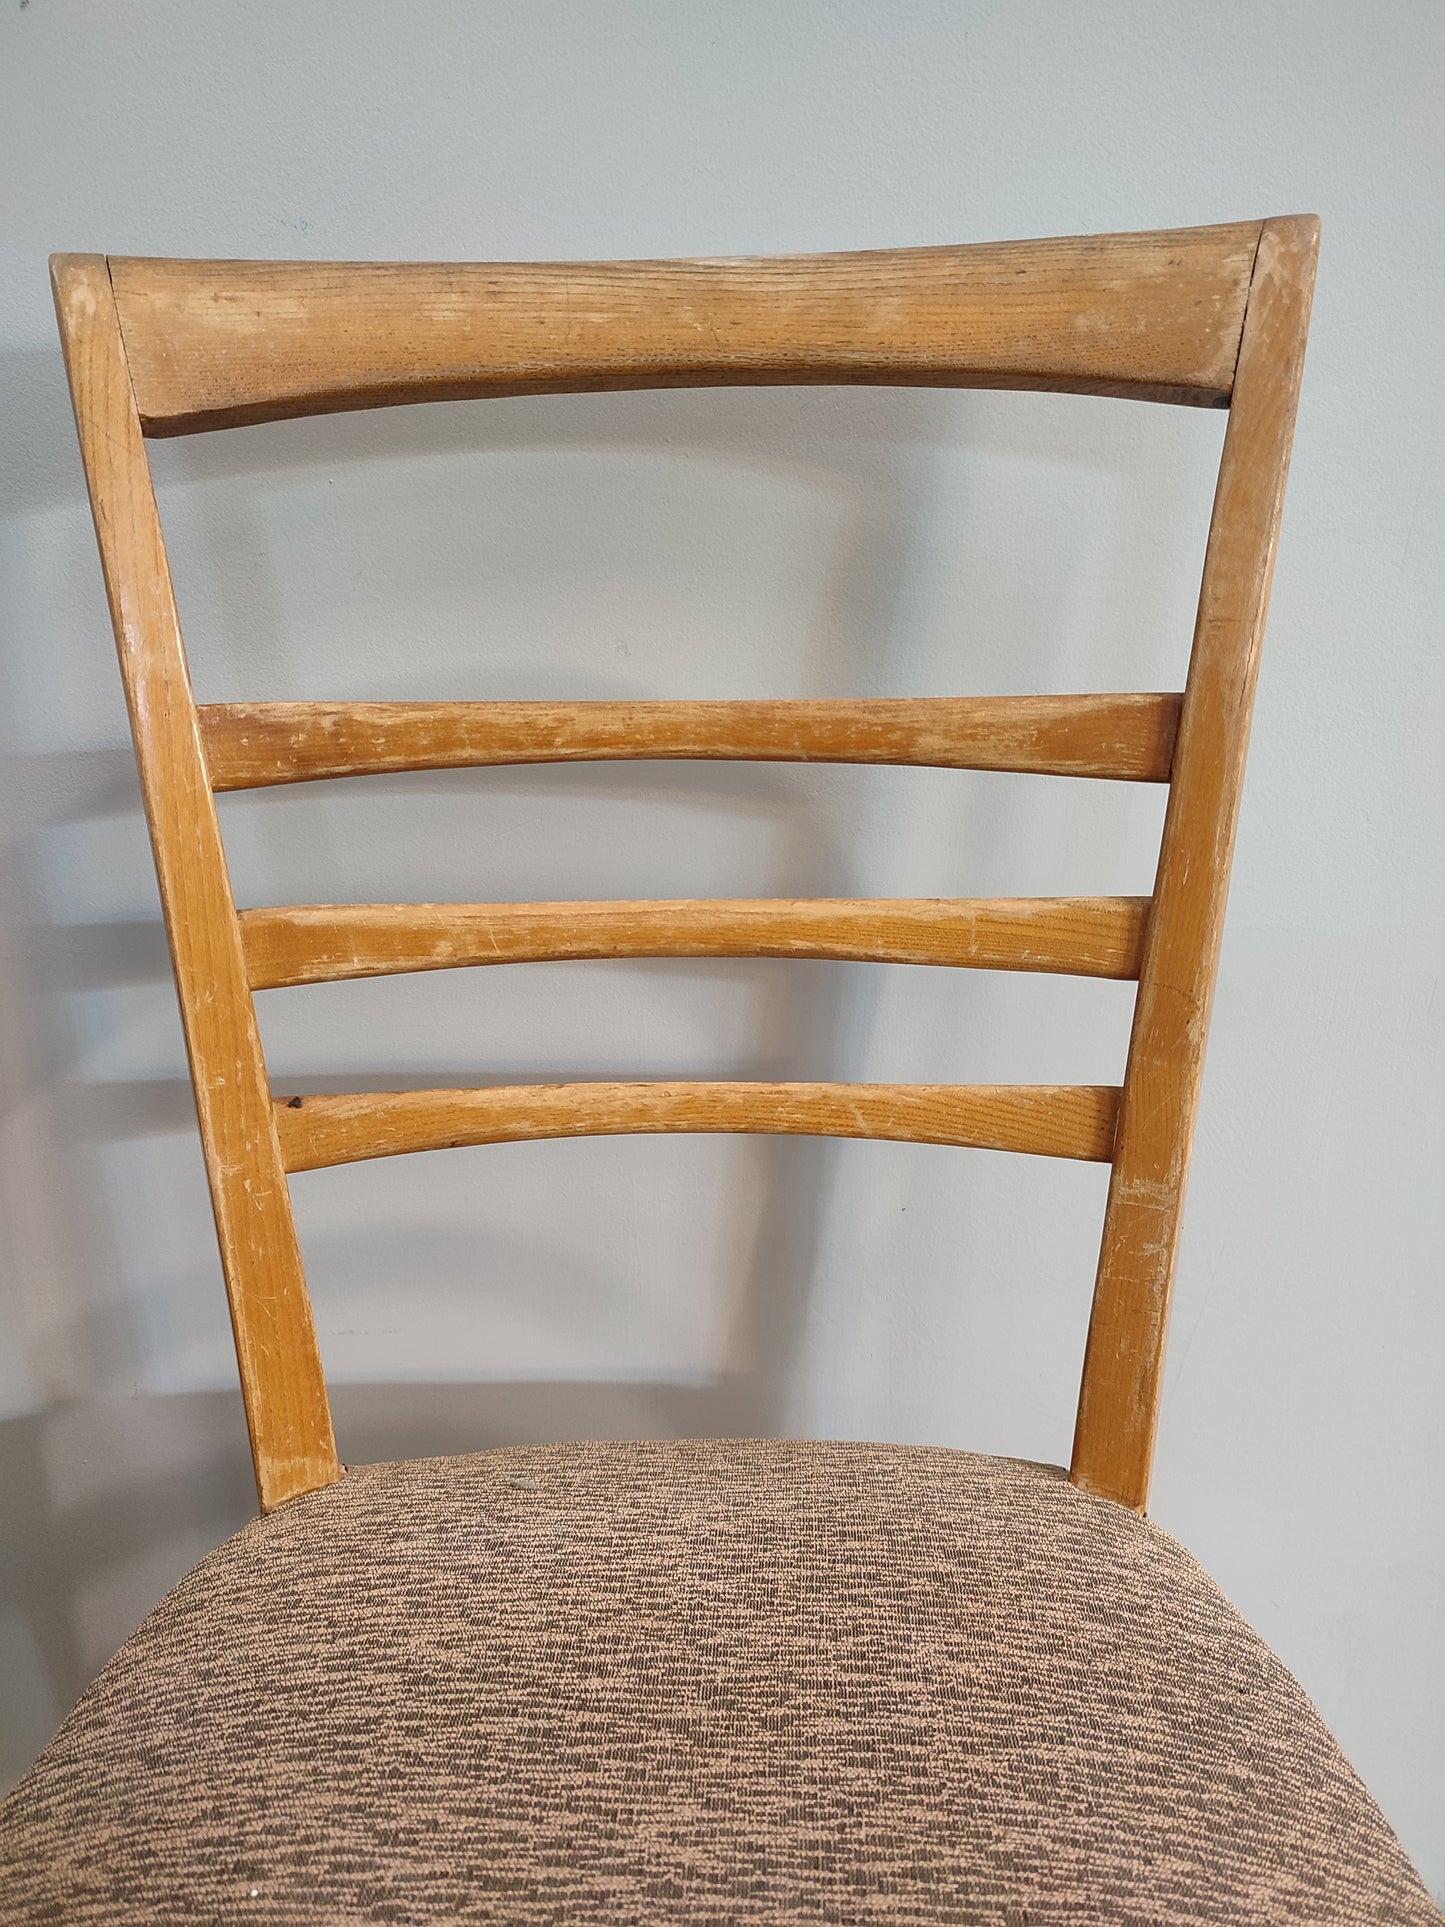 60863 Set n 4 sedie in stile danese + 2 omaggio da restaurare